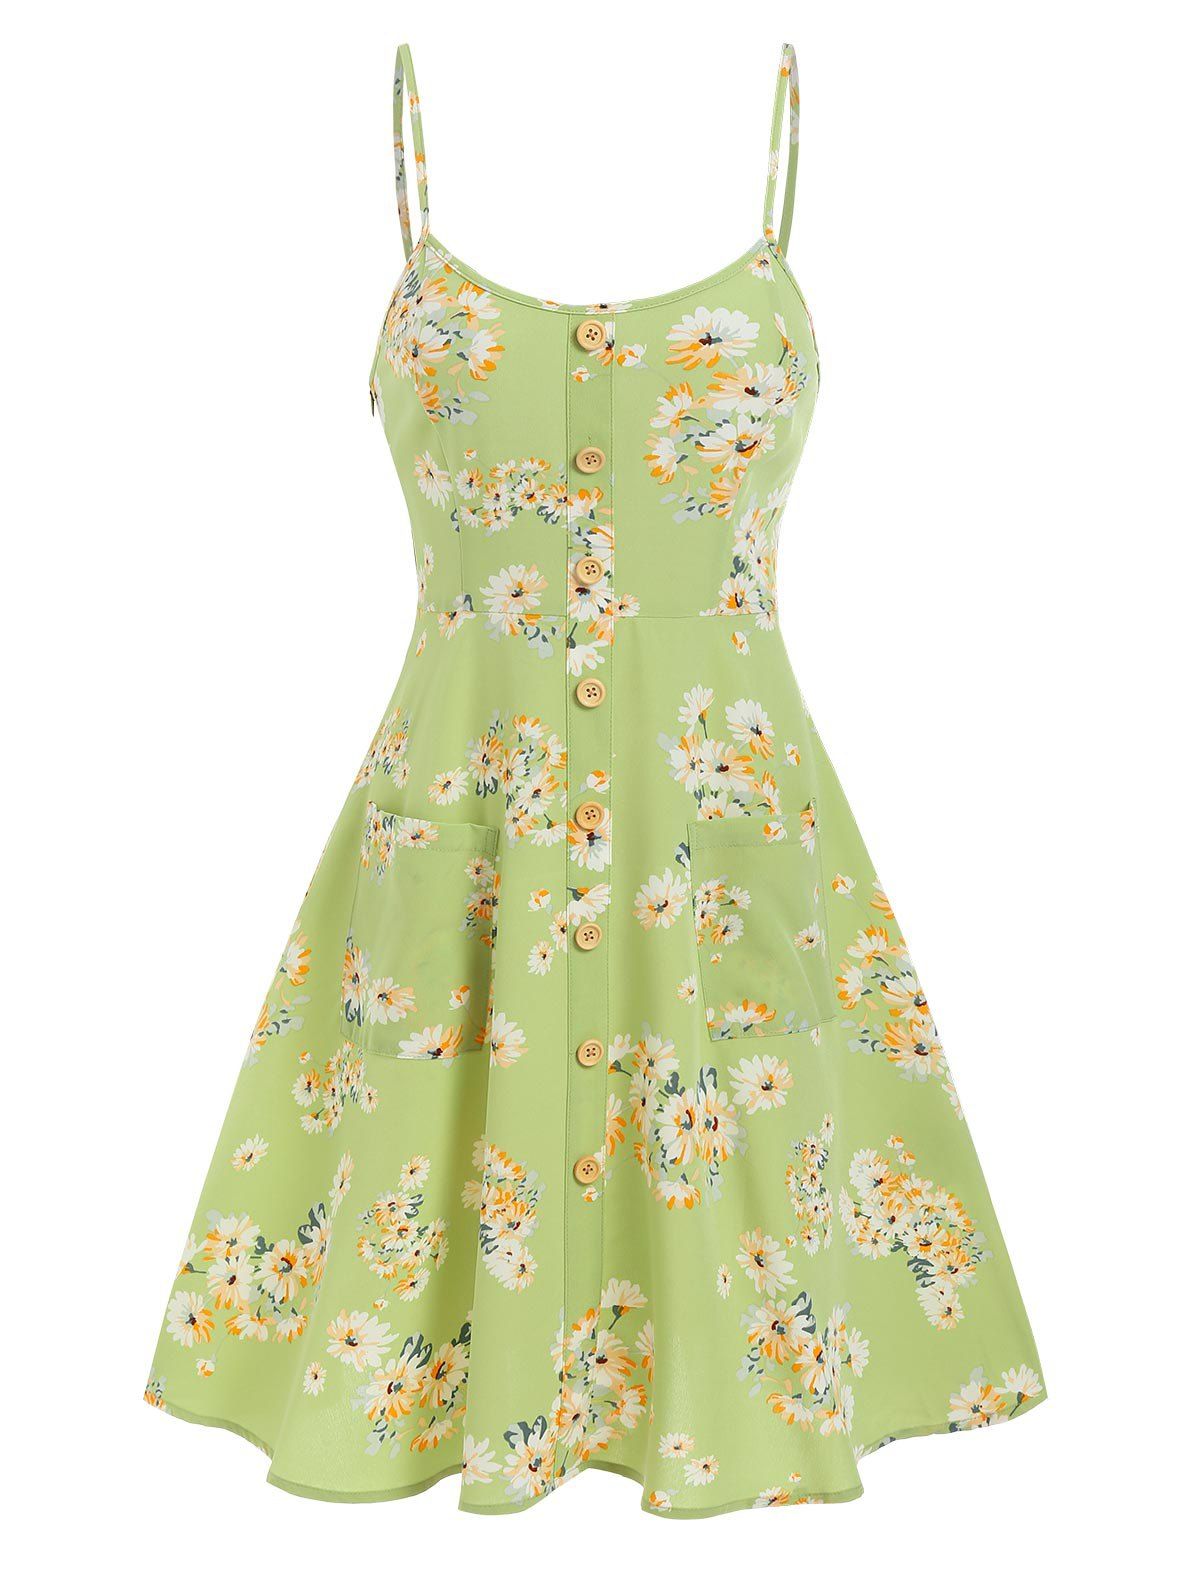 Bohemian Sundress Floral Print Pockets Fit and Flare Dress - LIGHT GREEN L